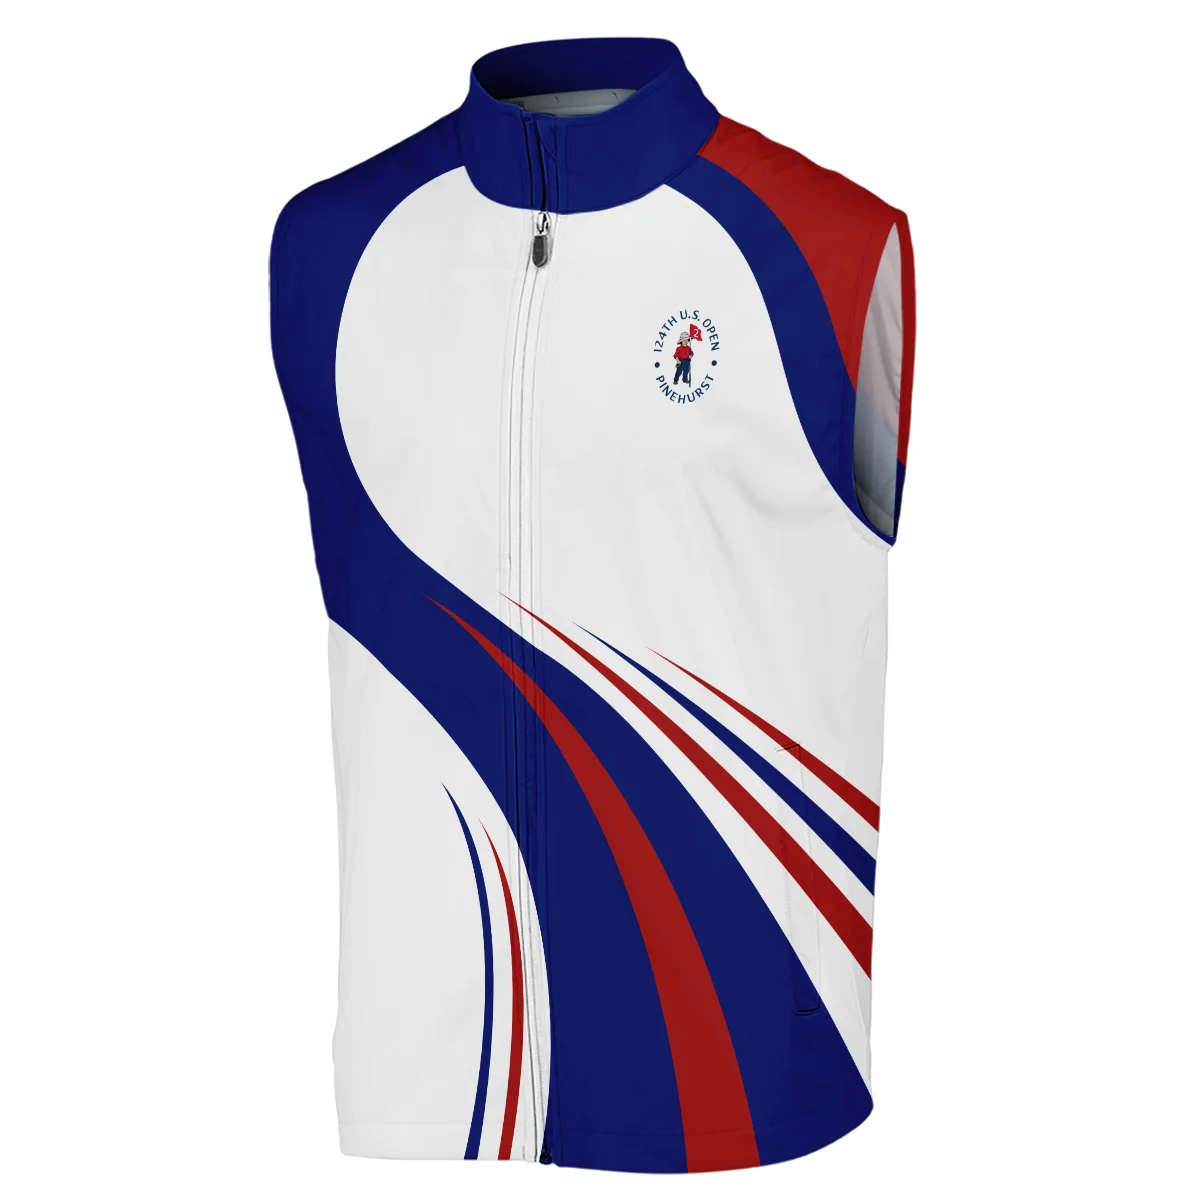 Titleist 124th U.S. Open Pinehurst Golf Blue Red White Background Zipper Hoodie Shirt Style Classic Zipper Hoodie Shirt